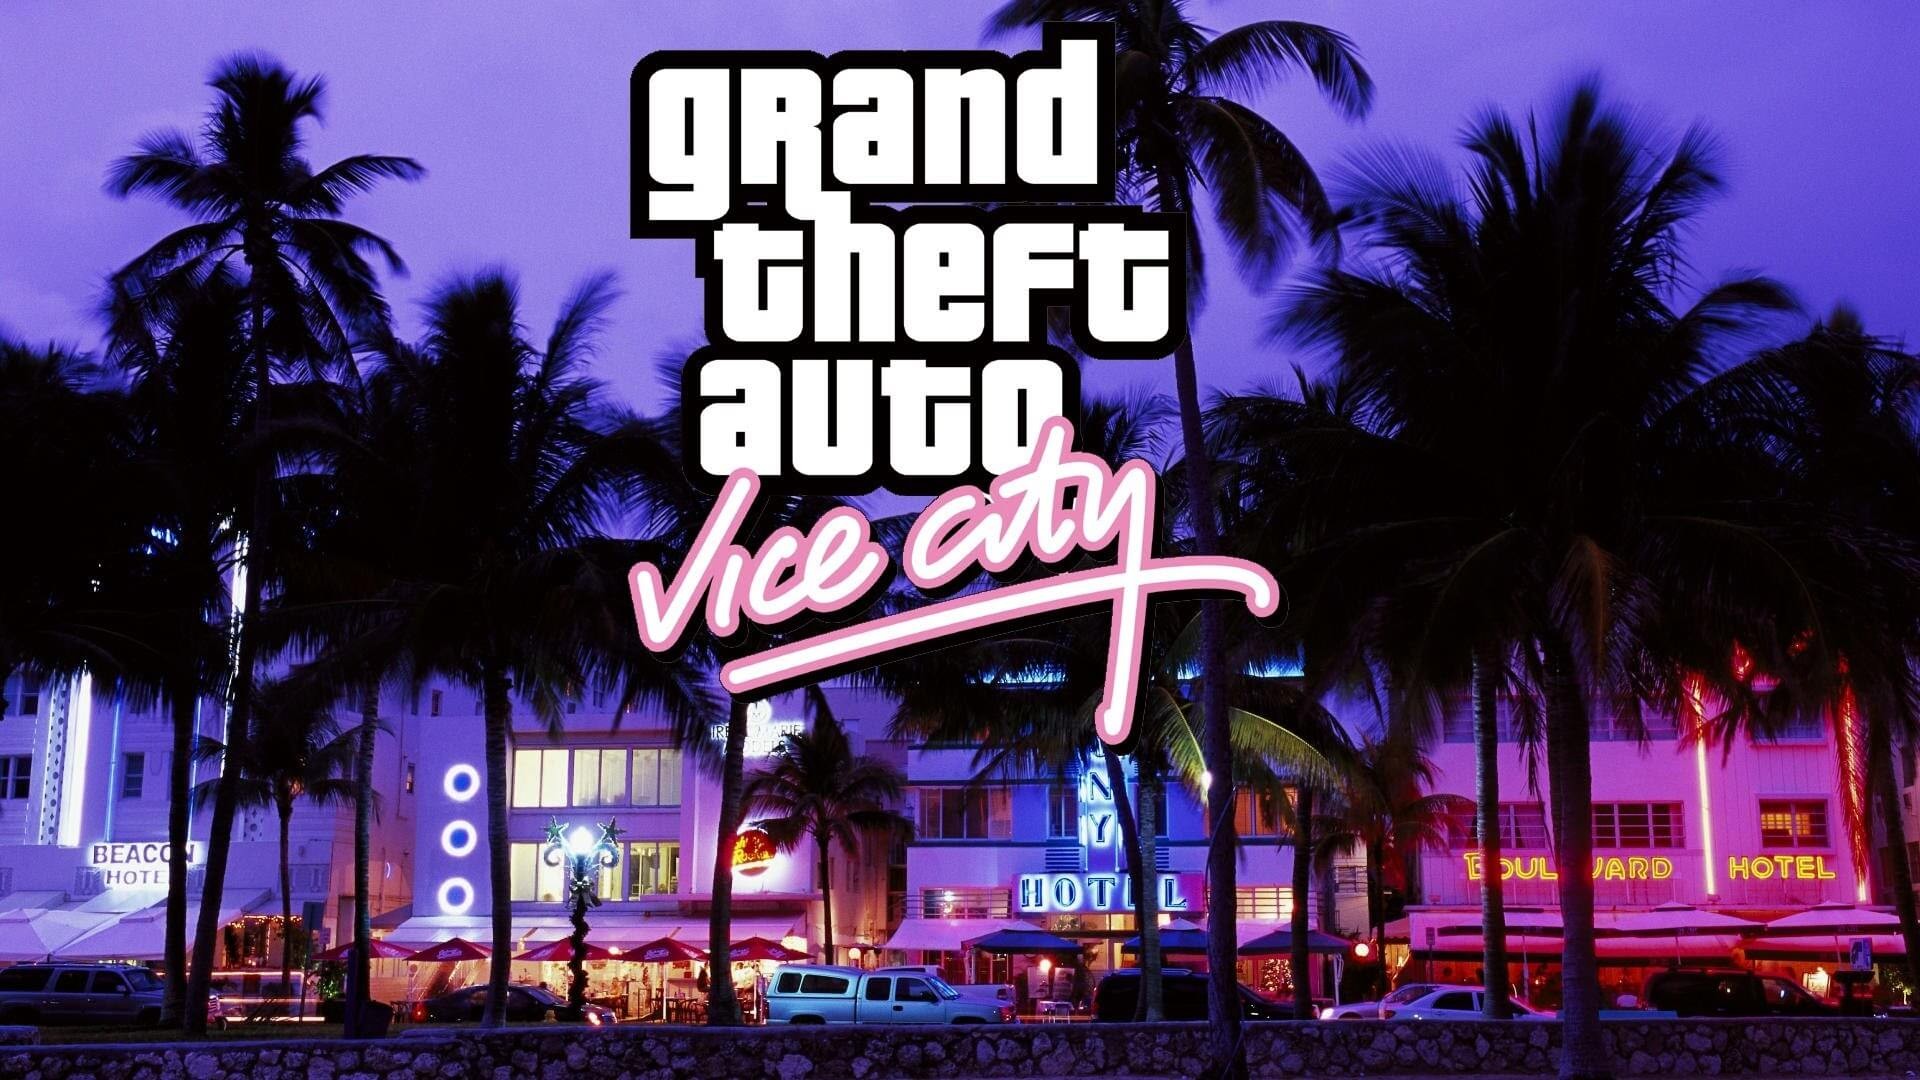 Grand Theft Auto Vice City Wallpaper On